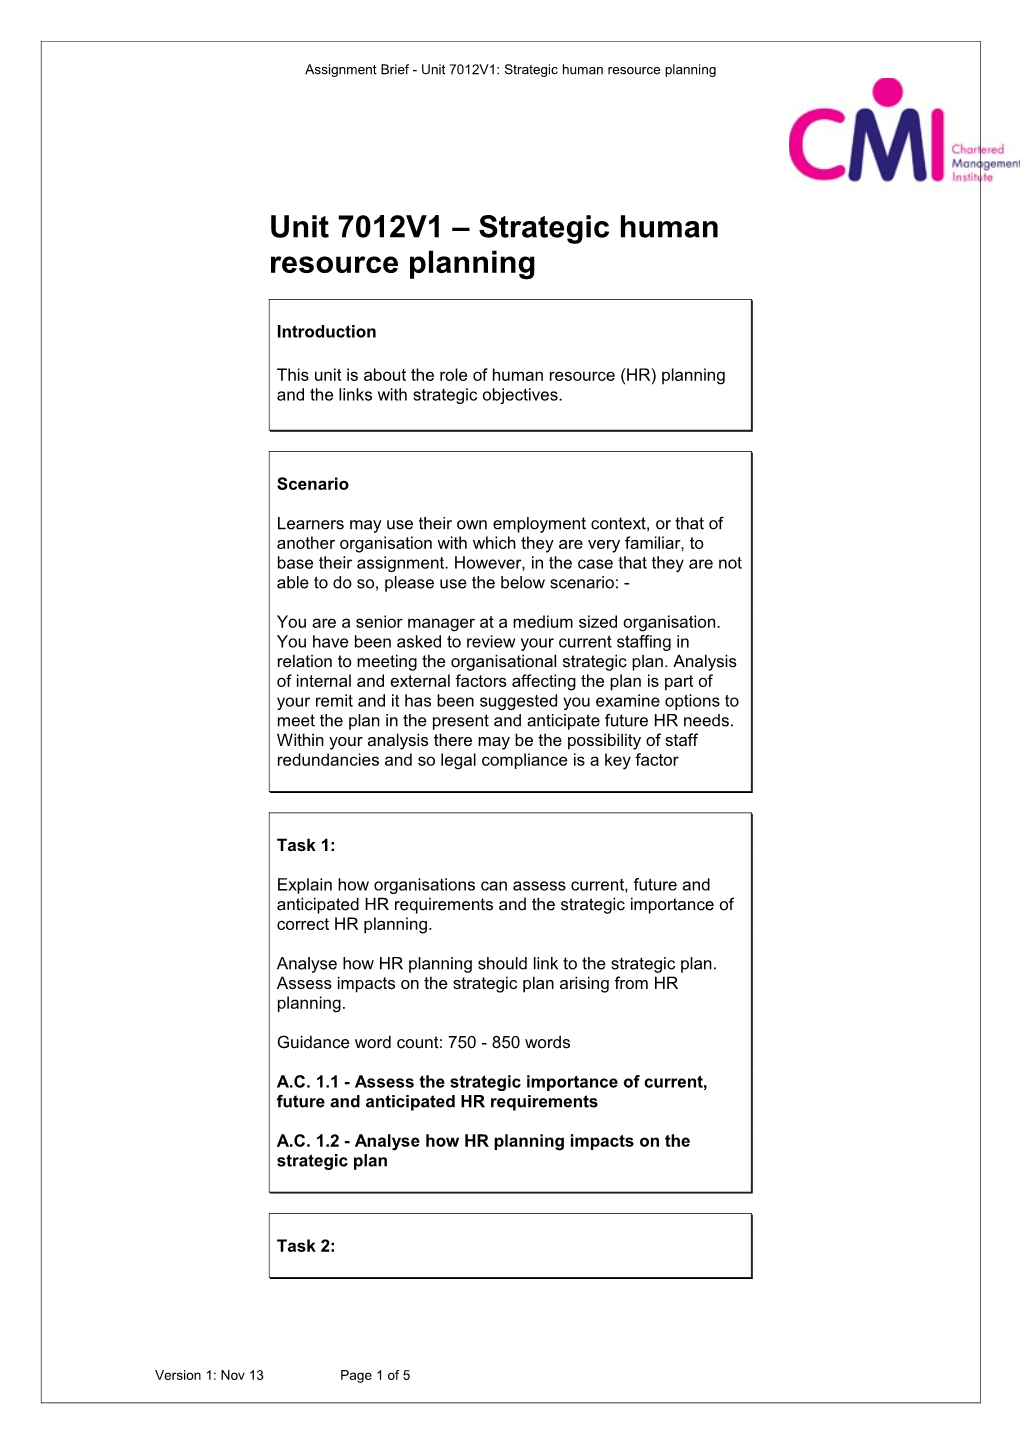 Assignment Brief - Unit 7012V1: Strategic Human Resource Planning